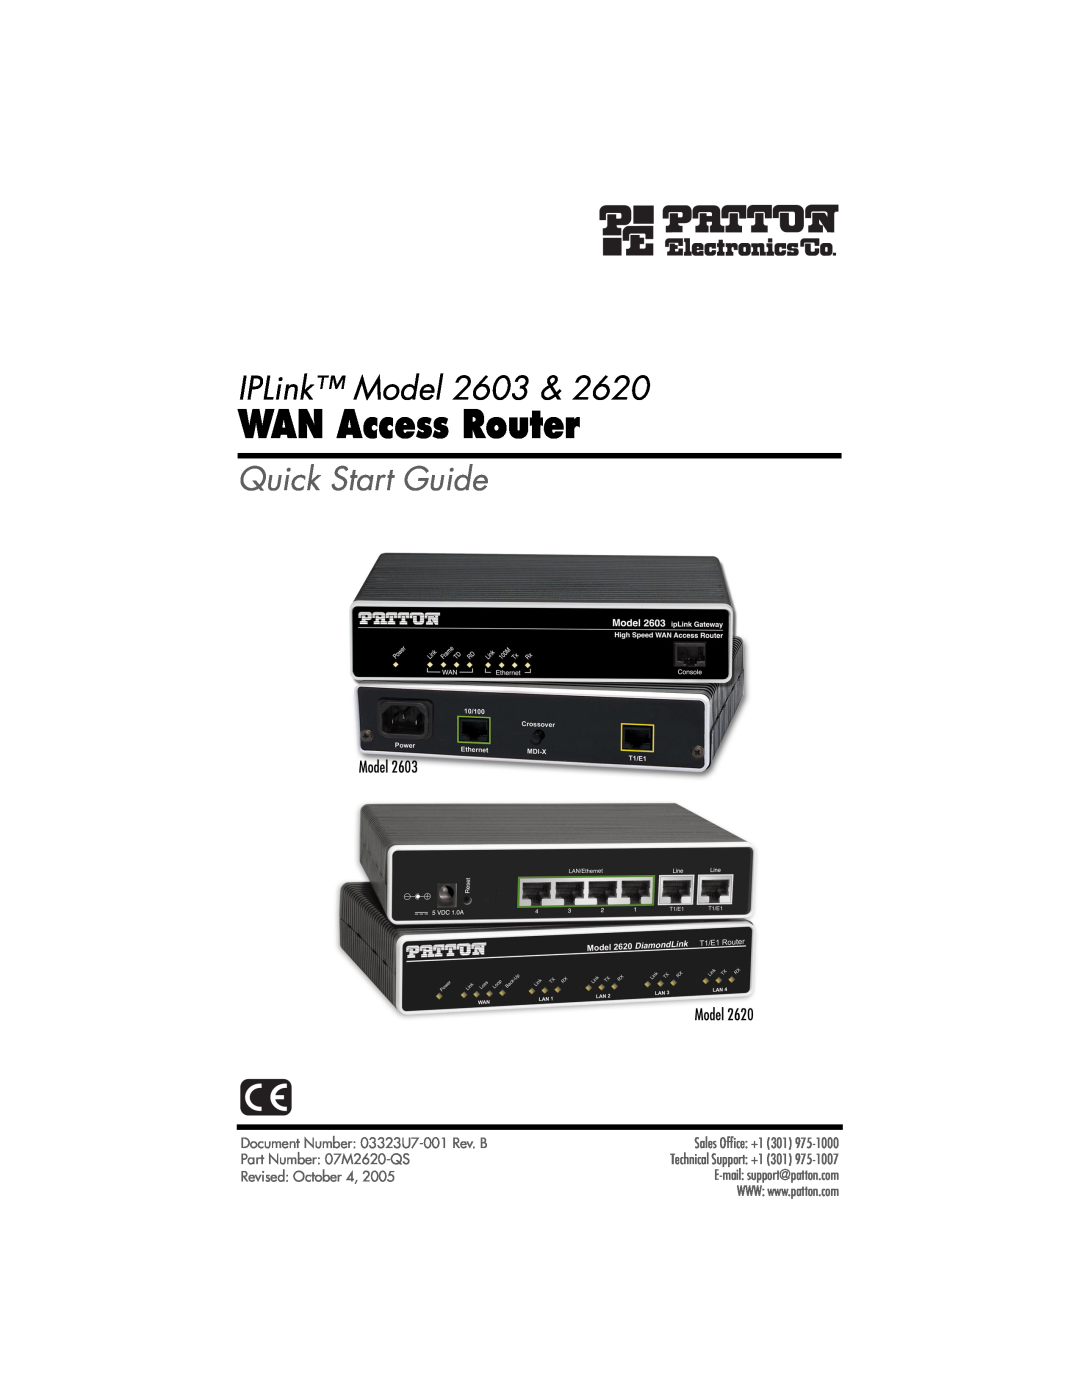 Patton electronic quick start WAN Access Router, IPLink Model 2603, Quick Start Guide, Part Number 07M2620-QS 